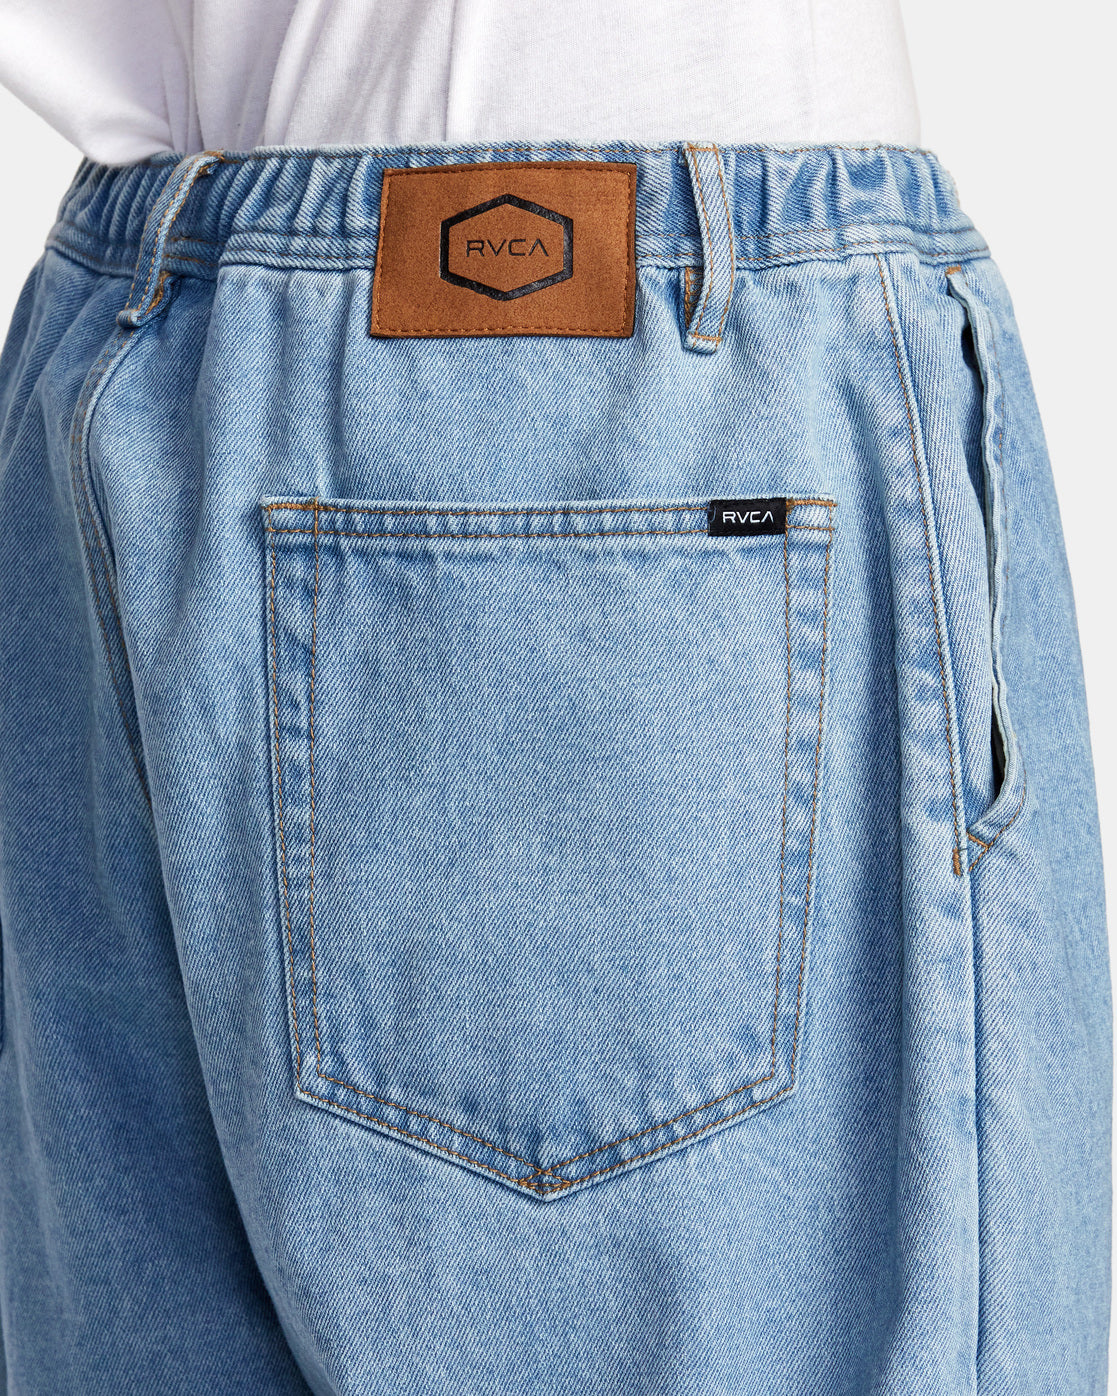 Buy Soojun Mens Casual Loose Fit Elastic Waist Jeans Denim Pants, Deep  Blue, 30W x 28L at Amazon.in